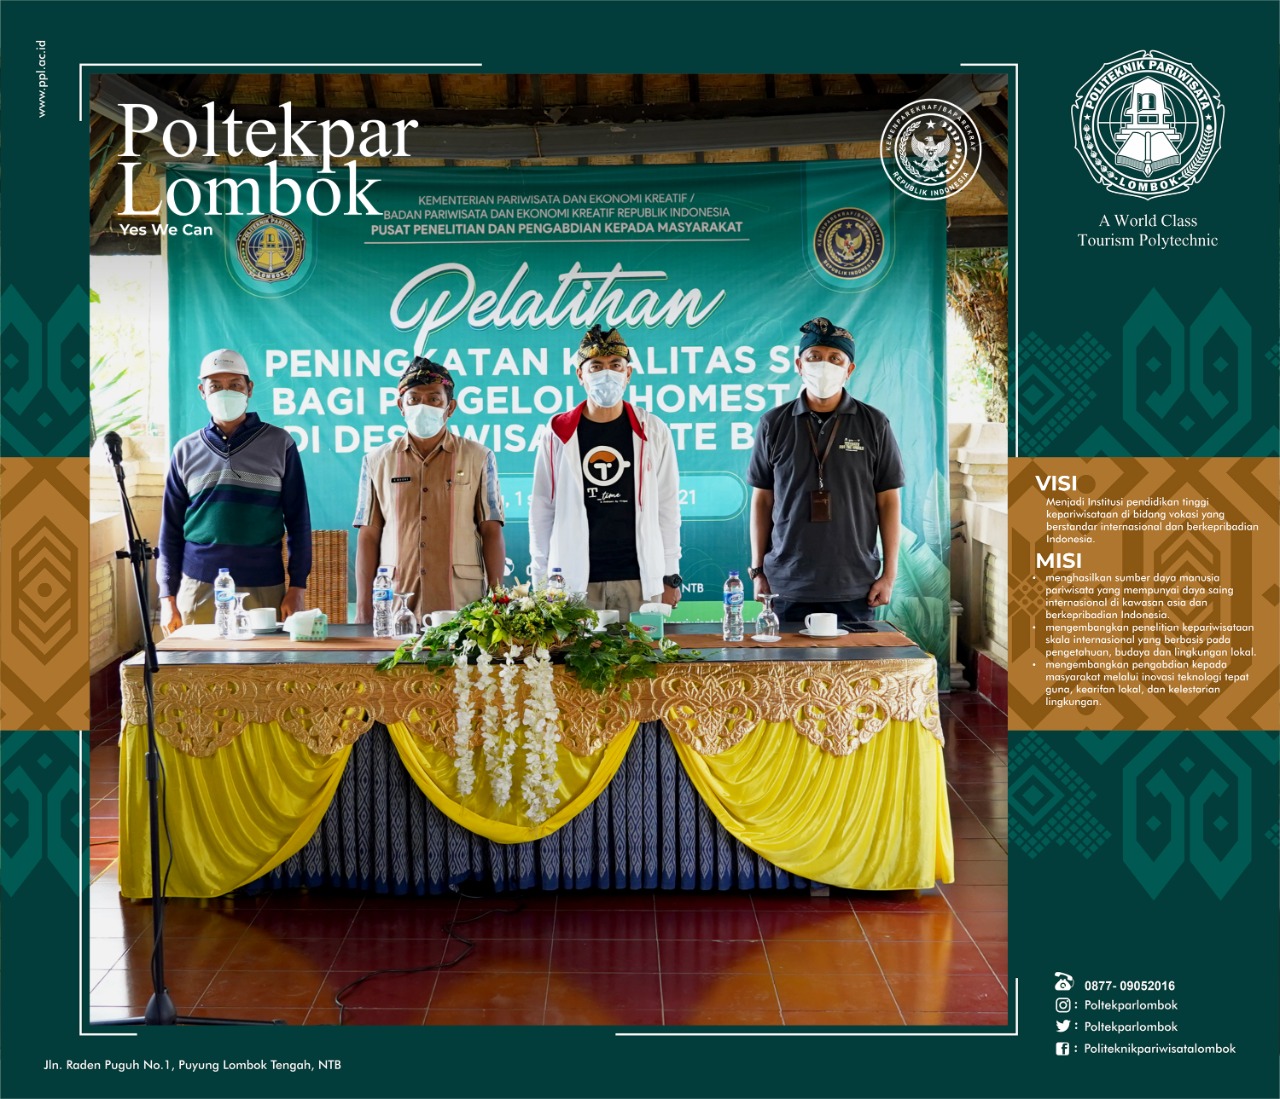 Poltekpar Lombok Gelar Pelatihan Tingkatkan Kualitas SDM Pengelola Homestay